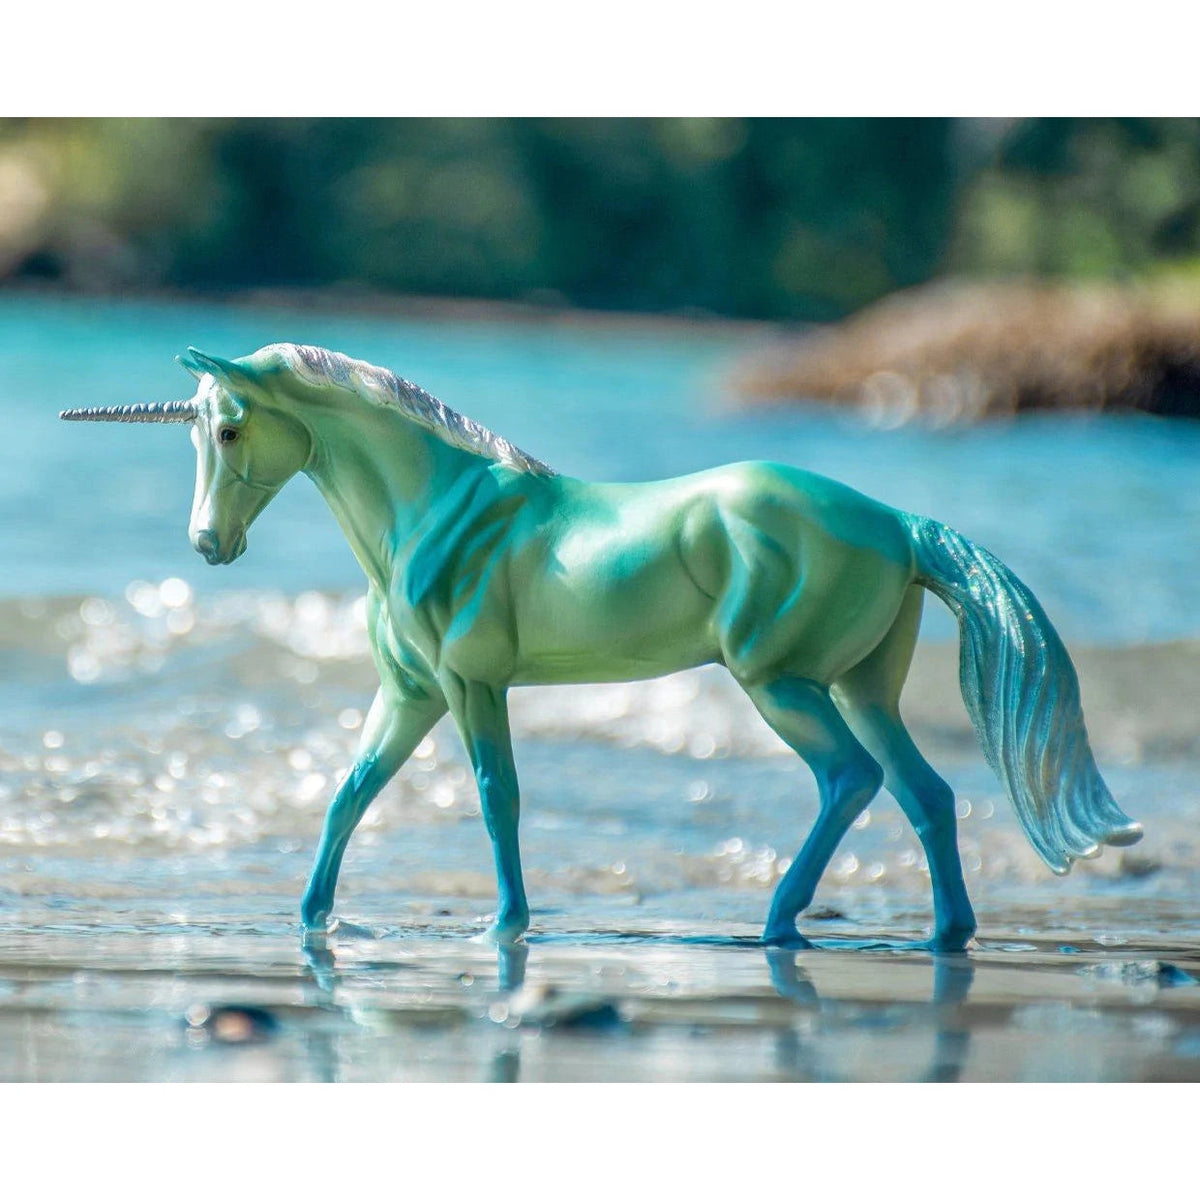 Breyer Freedom Series Le Mer, Unicorn of the Sea